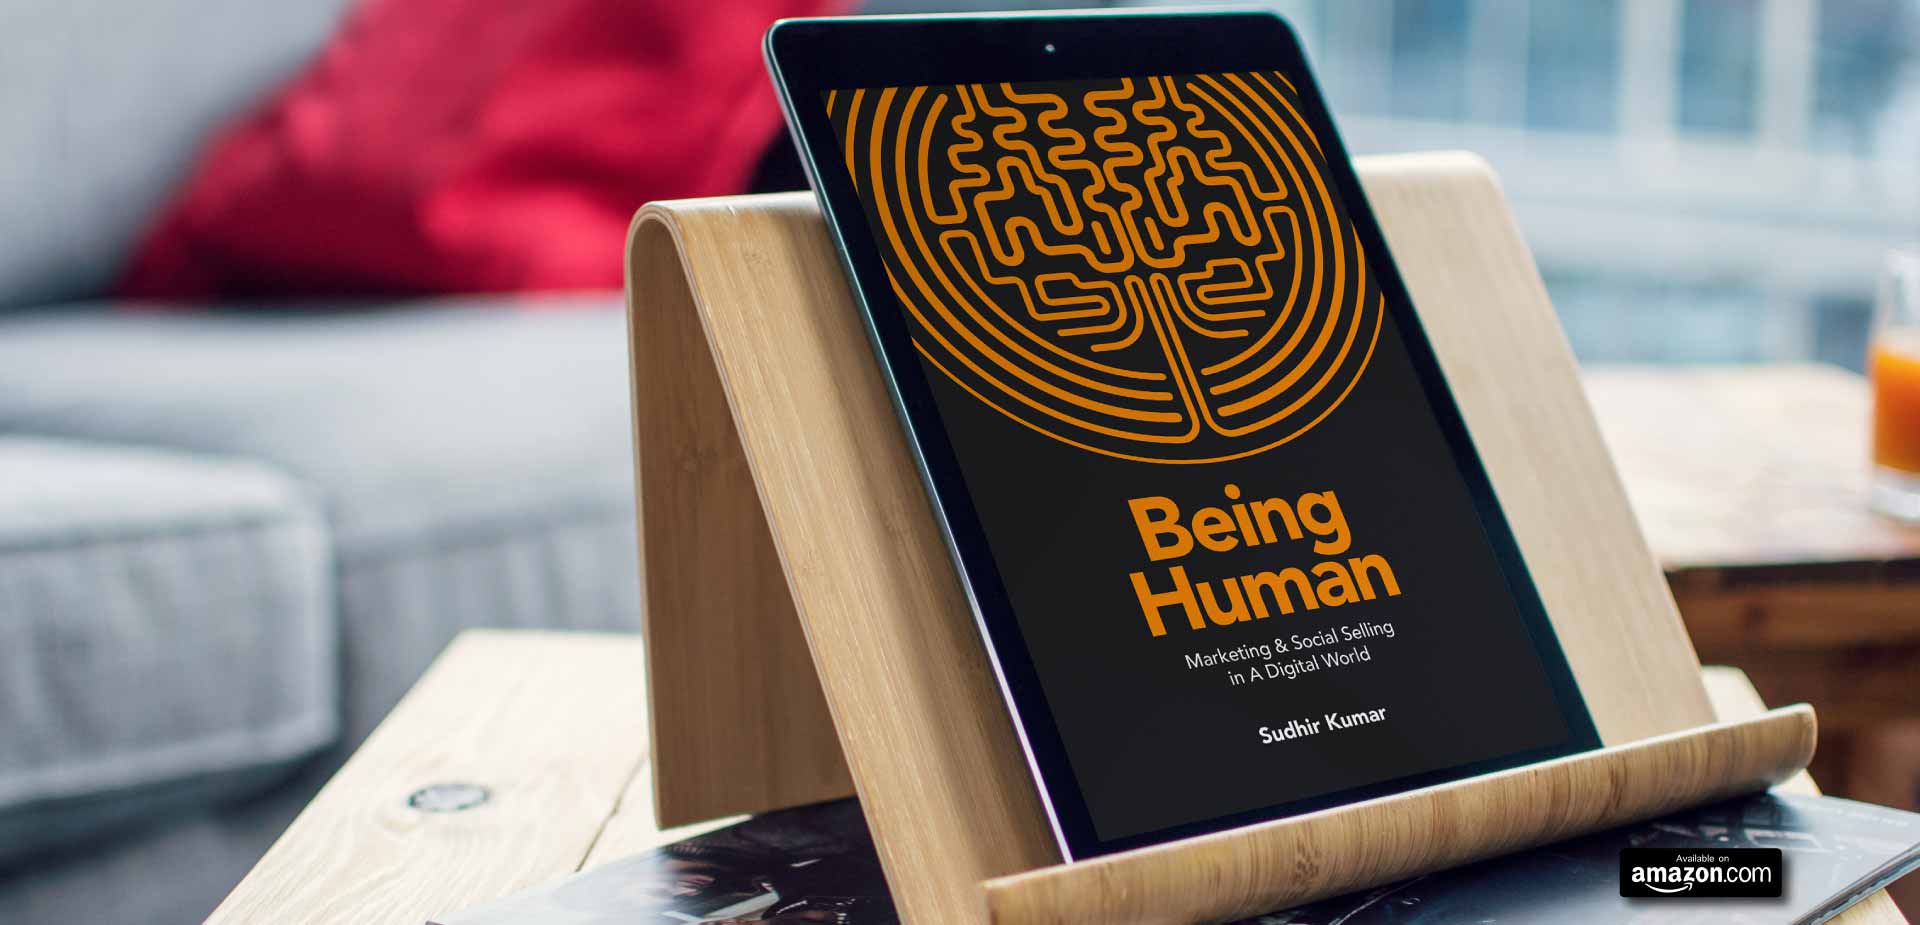 Being Human ebook